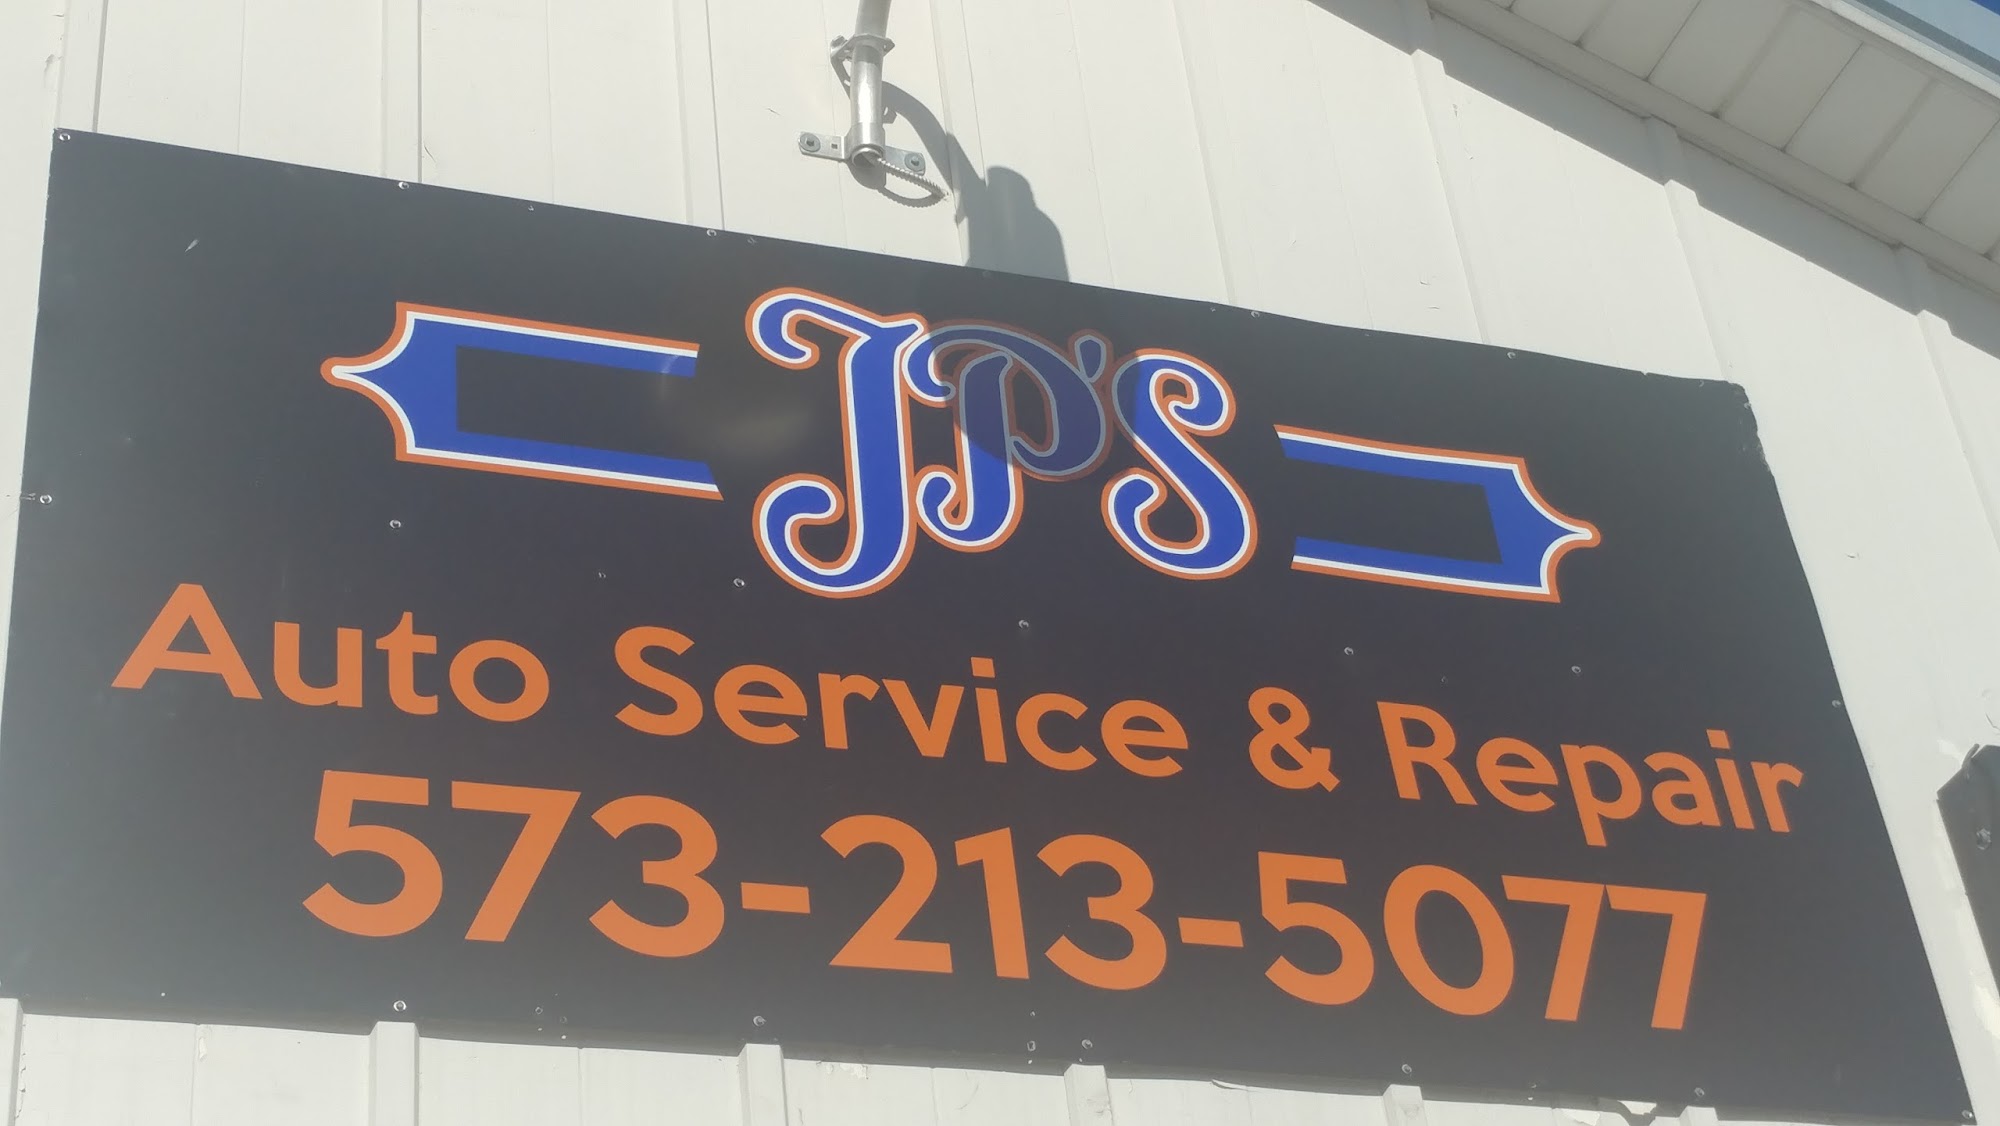 JP's Auto Service & Repair, LLC.